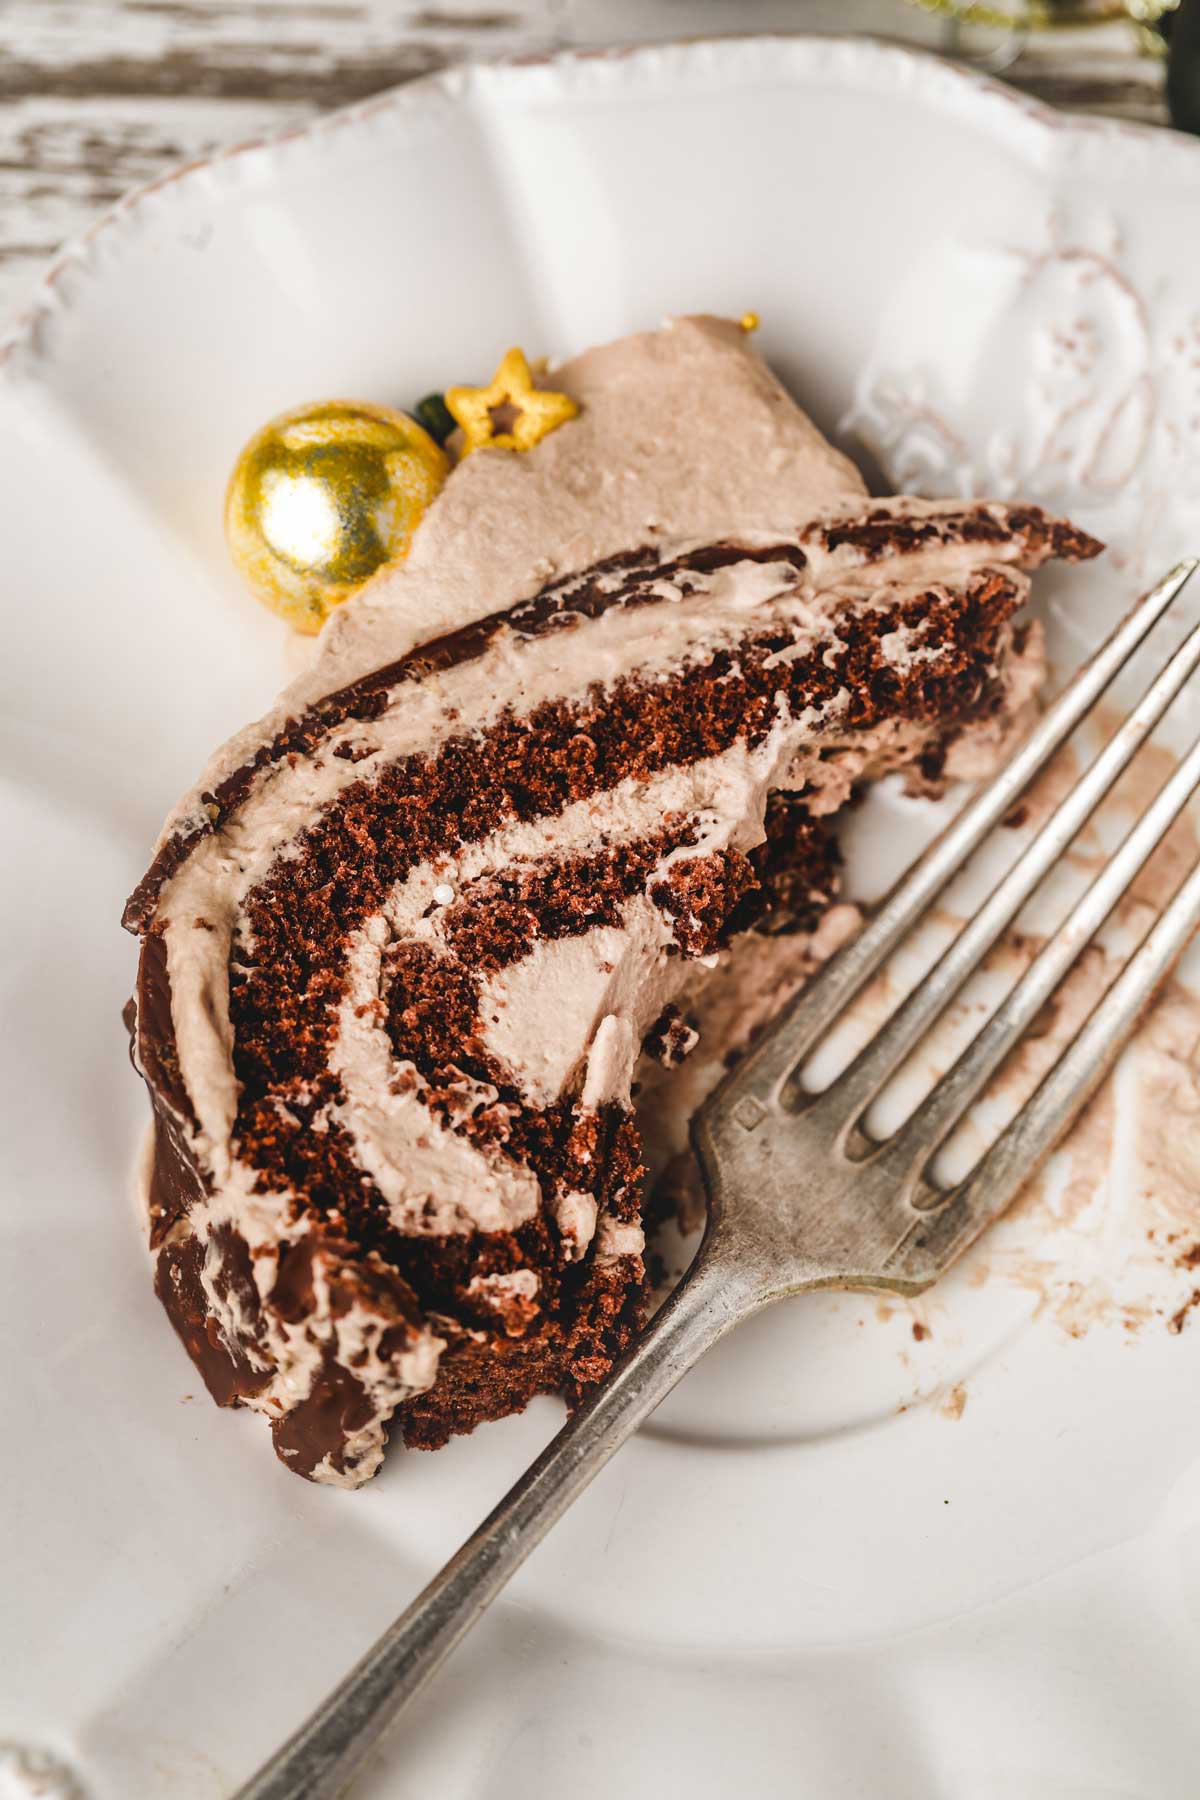 Slice of chocolat roll cake